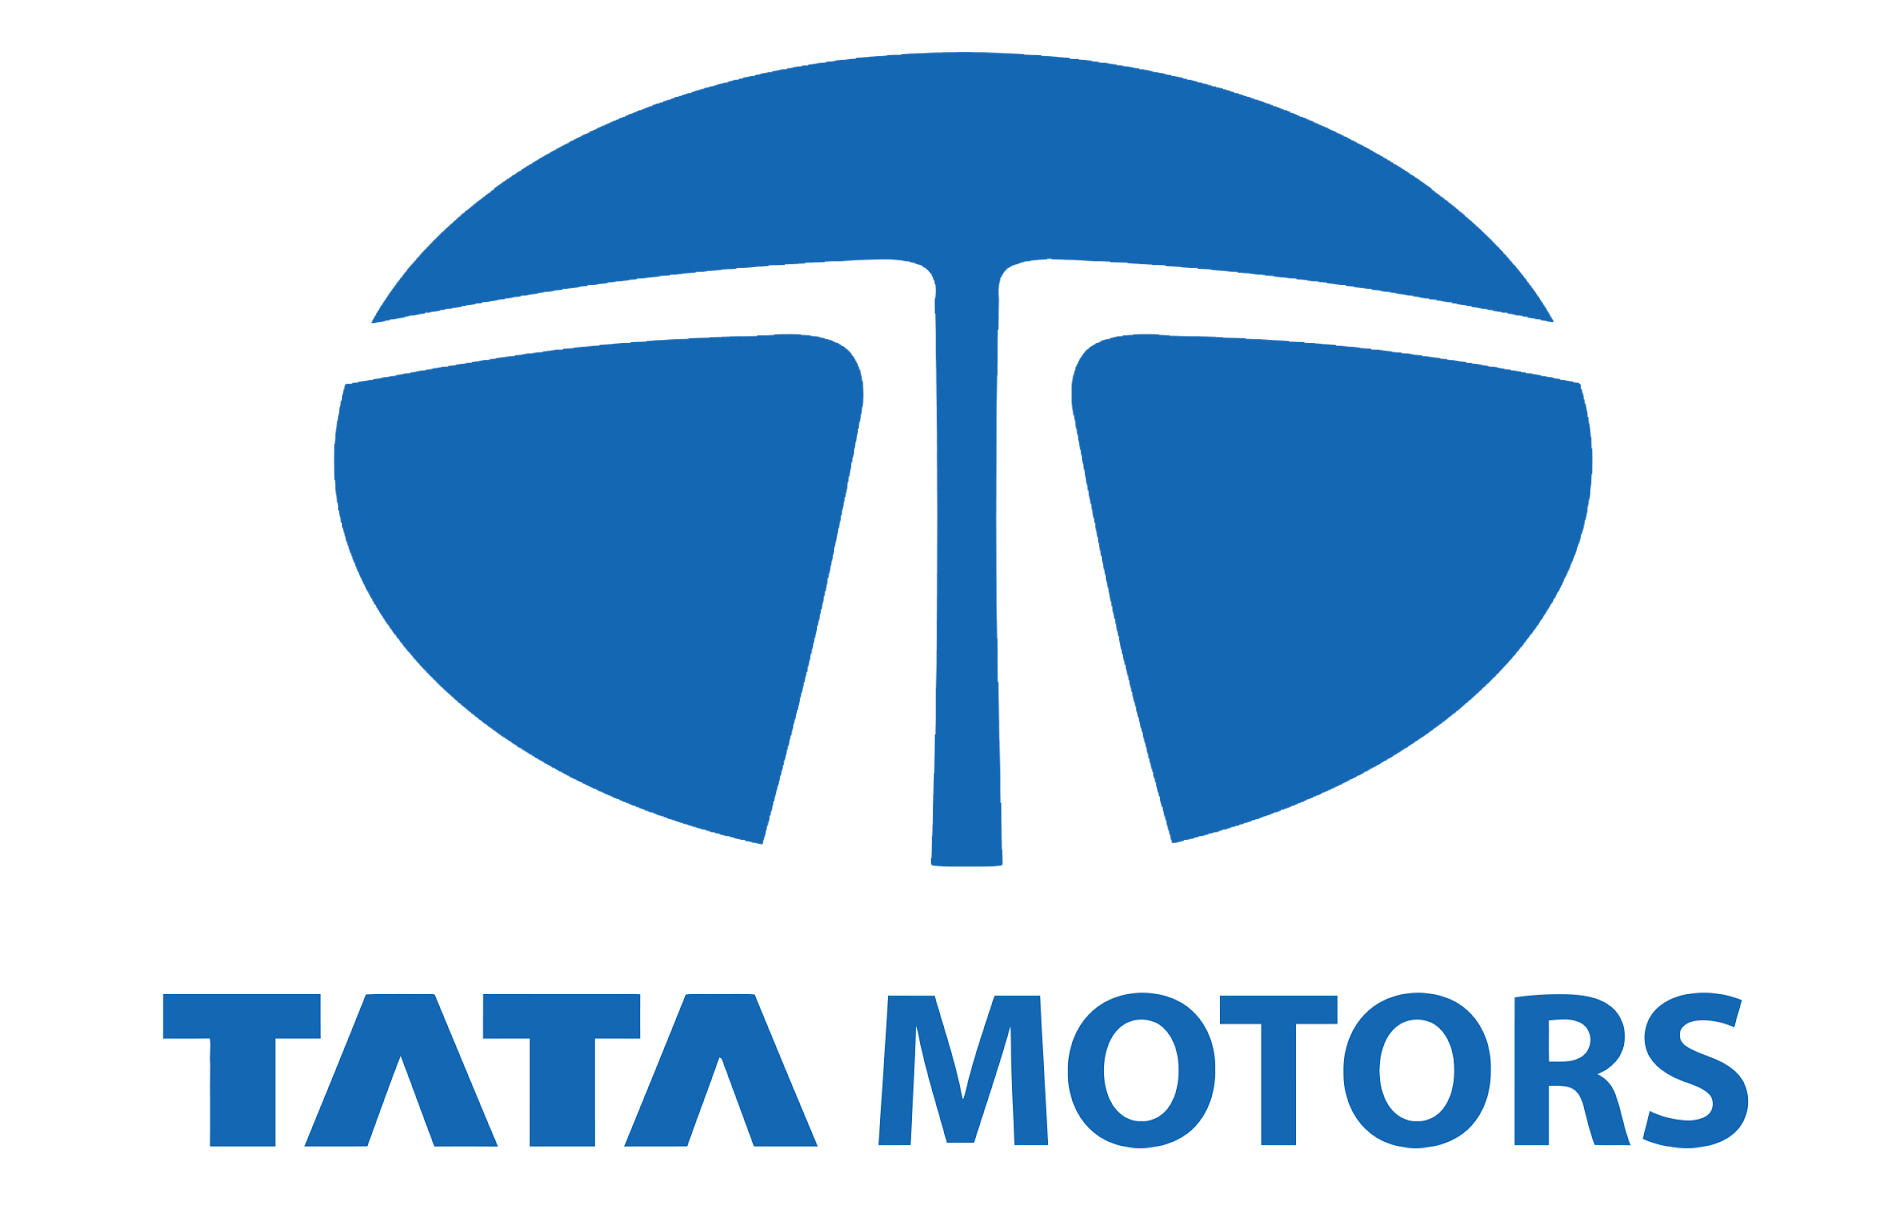 Tata Motors Cars Service Centre - Tiwari Automobiles|Show Room|Automotive